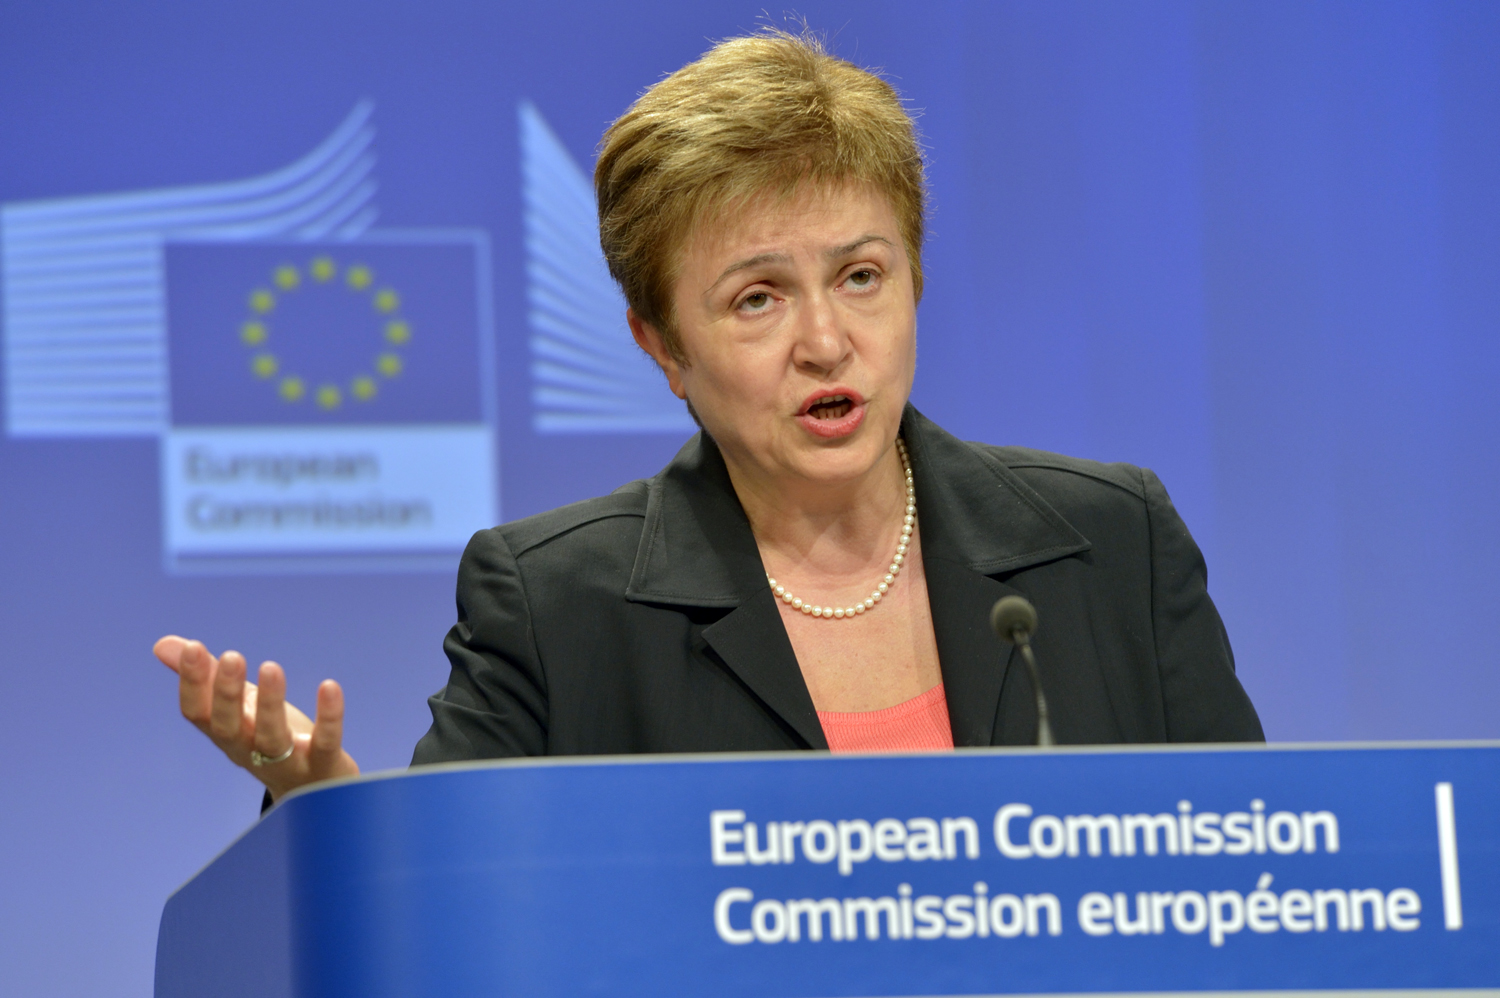 Kristalina Georgieva, EU Commissioner for International Cooperation and Humanitarian